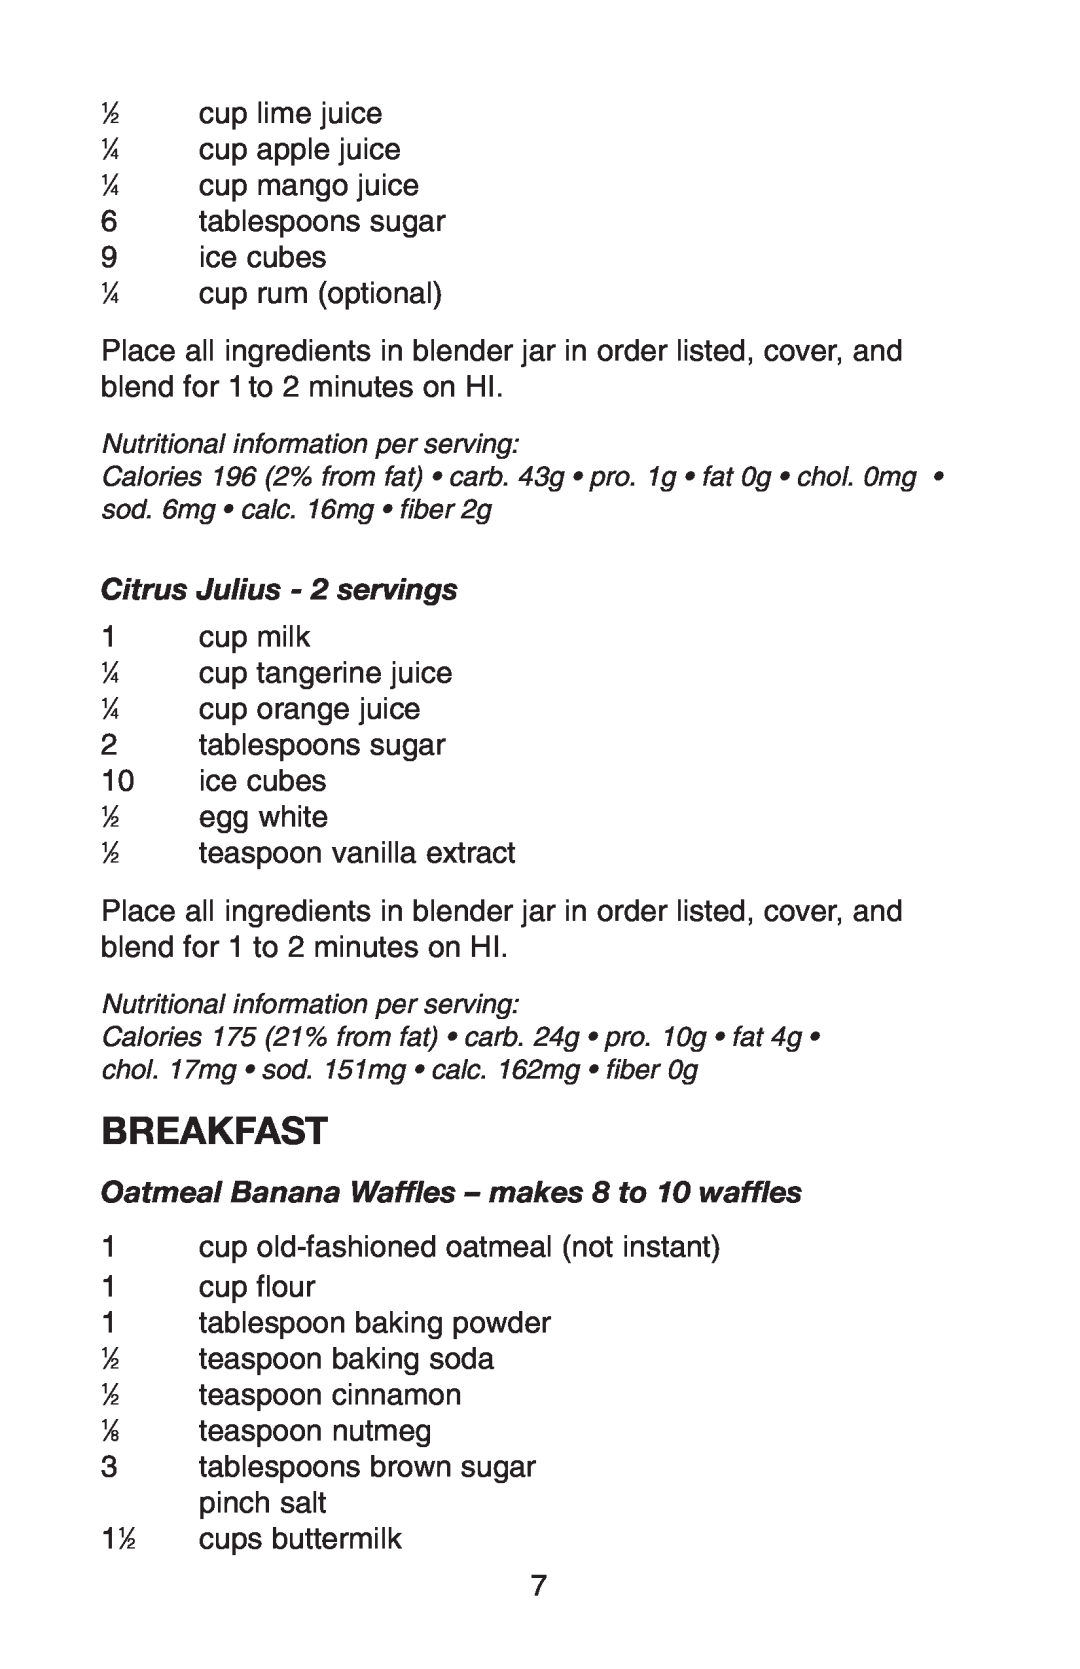 Conair RB70 manual Breakfast, Citrus Julius - 2 servings, Oatmeal Banana Waffles - makes 8 to 10 waffles 